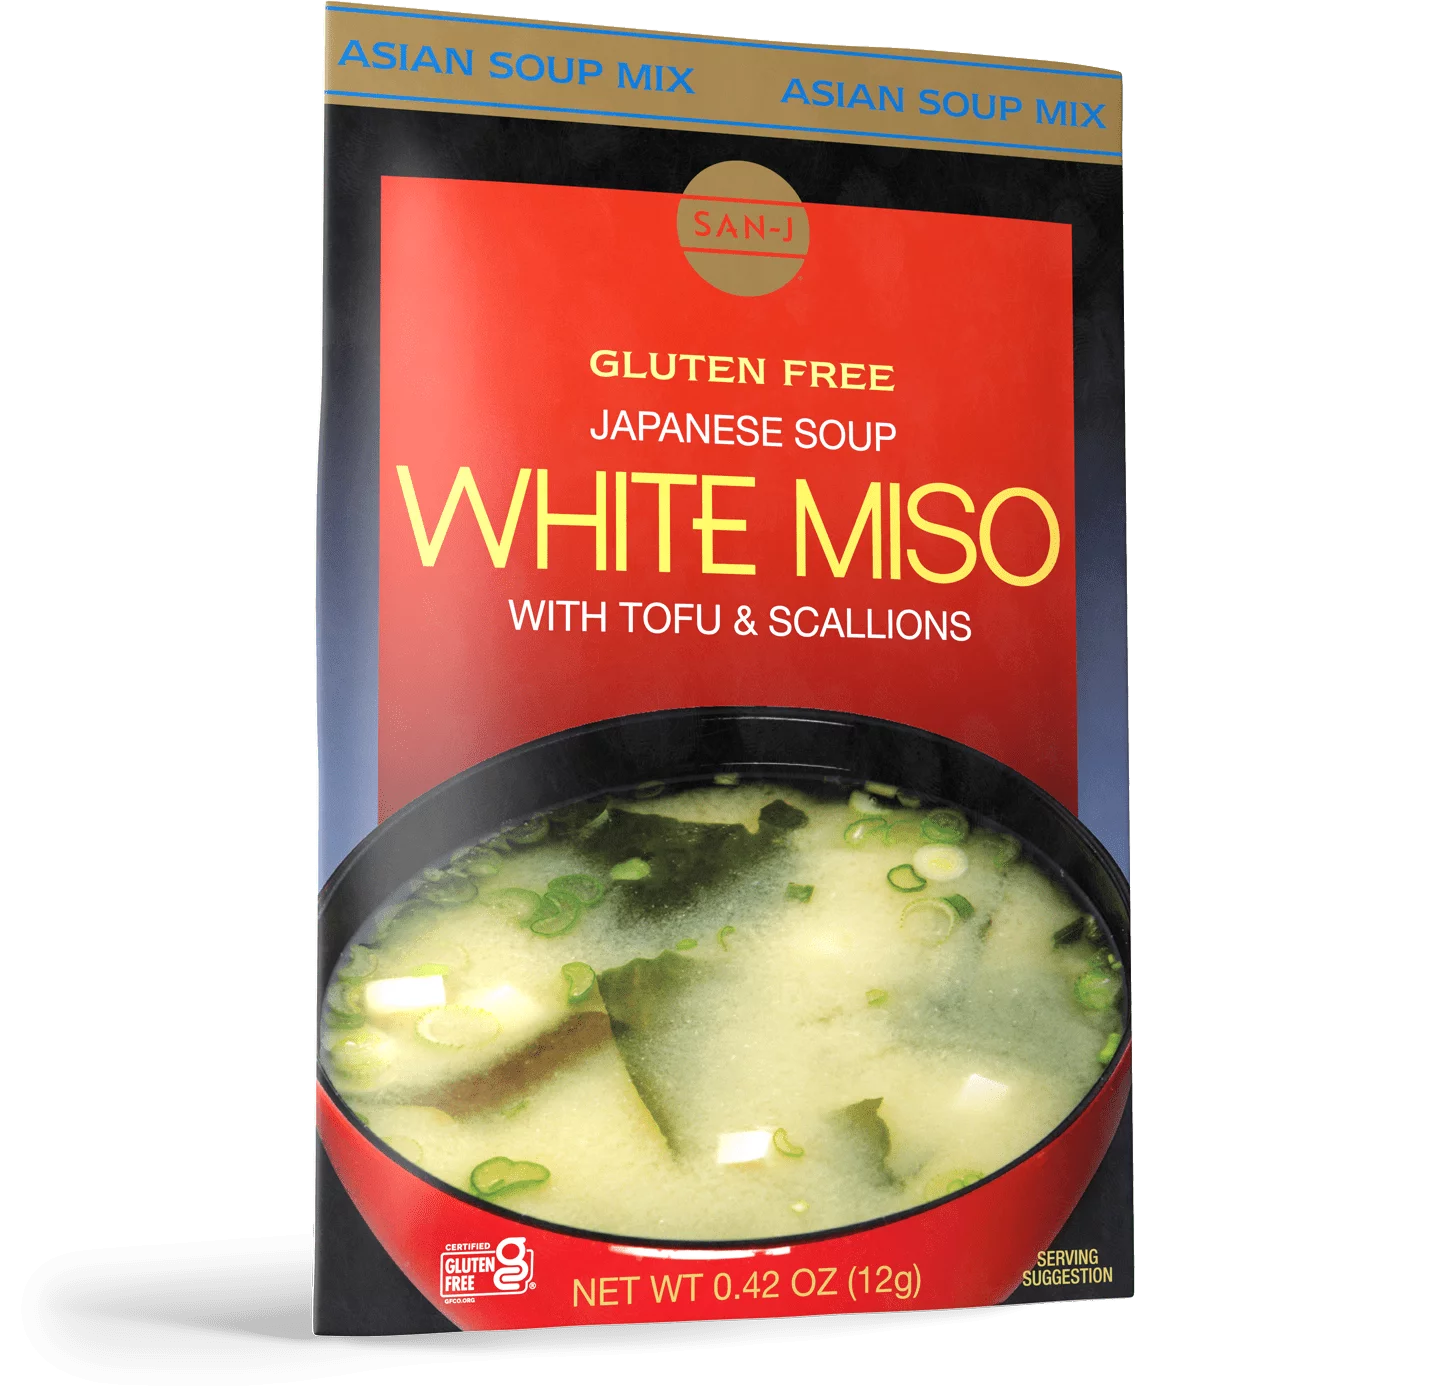 White miso soup no bg w shadow v3 min